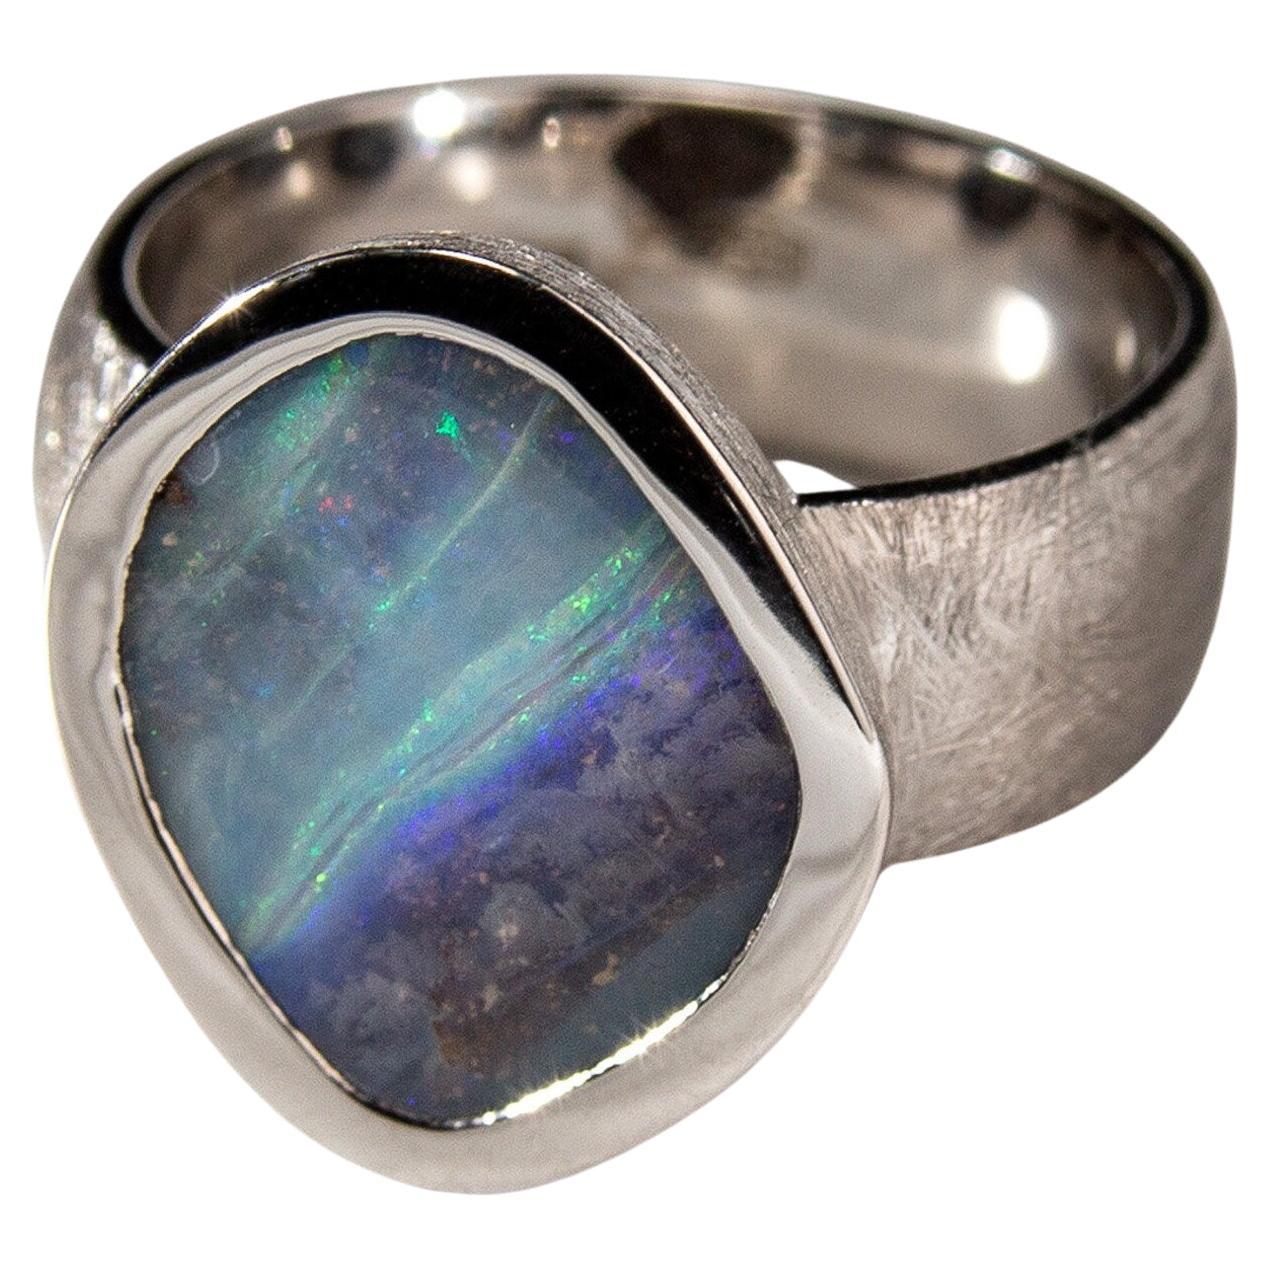 Boulder Opal Silver Ring Natural Australian 6ct Gemstone opal jewelry 